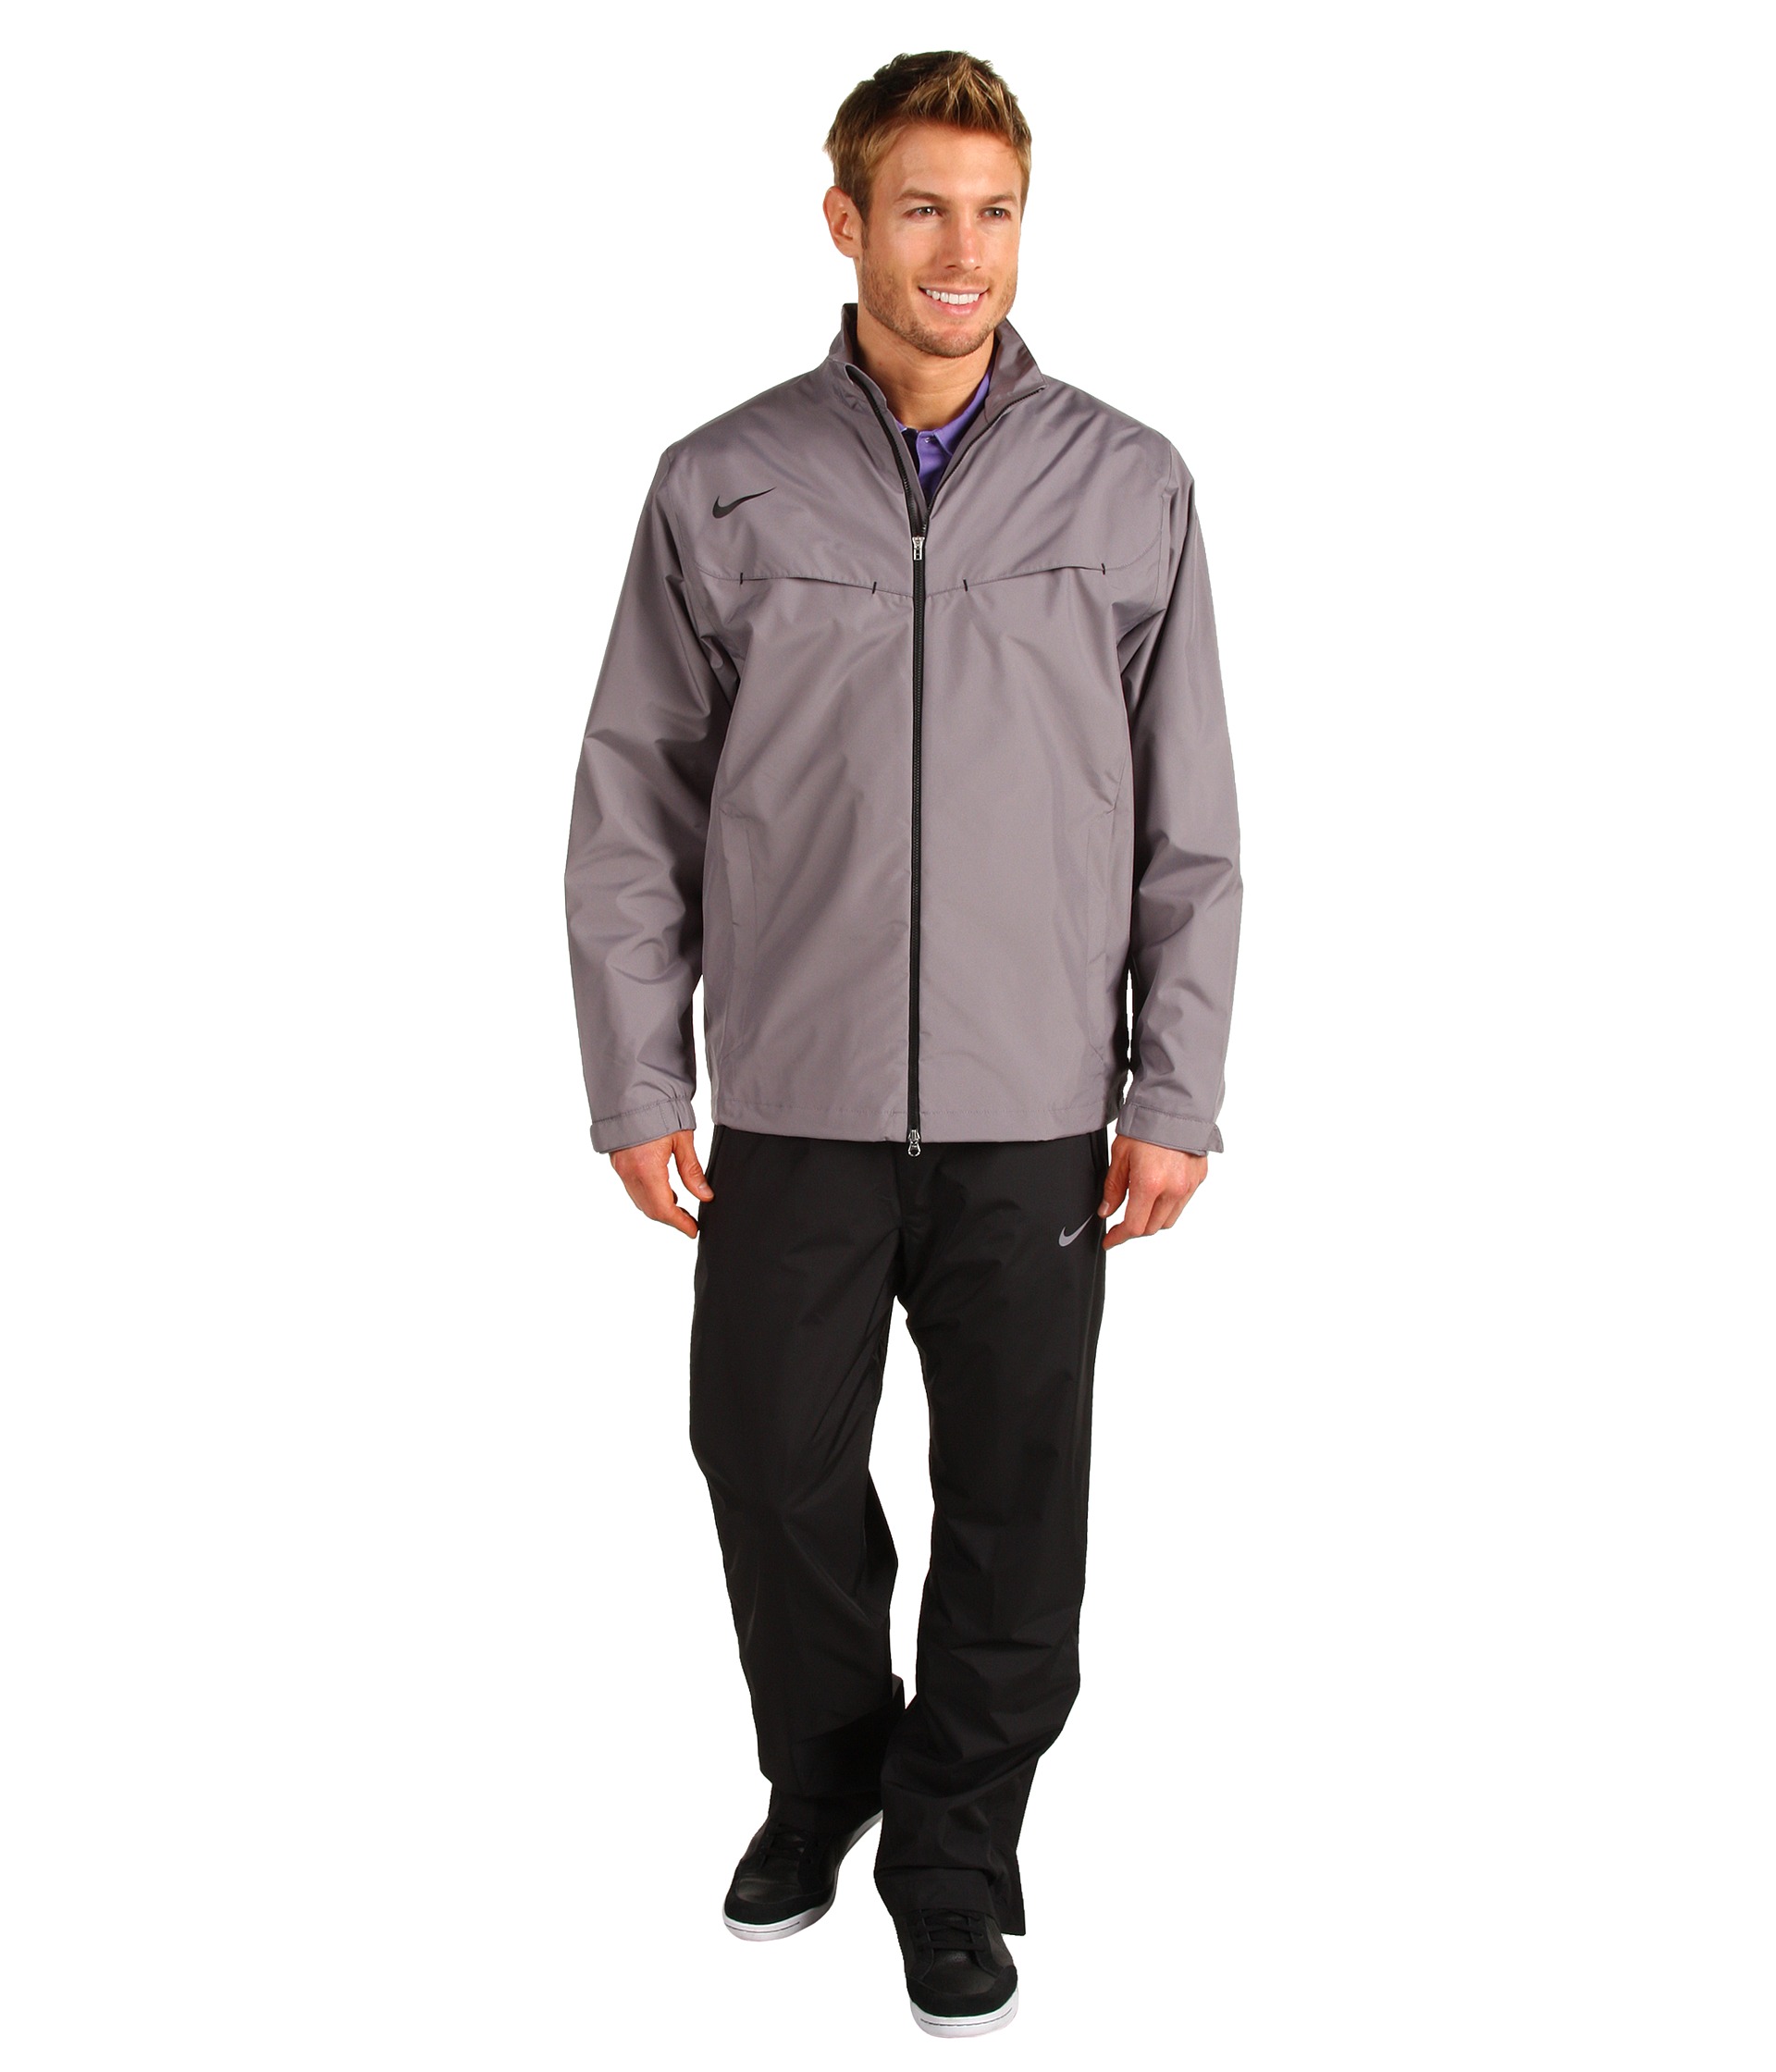 Nike Golf Storm Fit Rain Suit, Nike